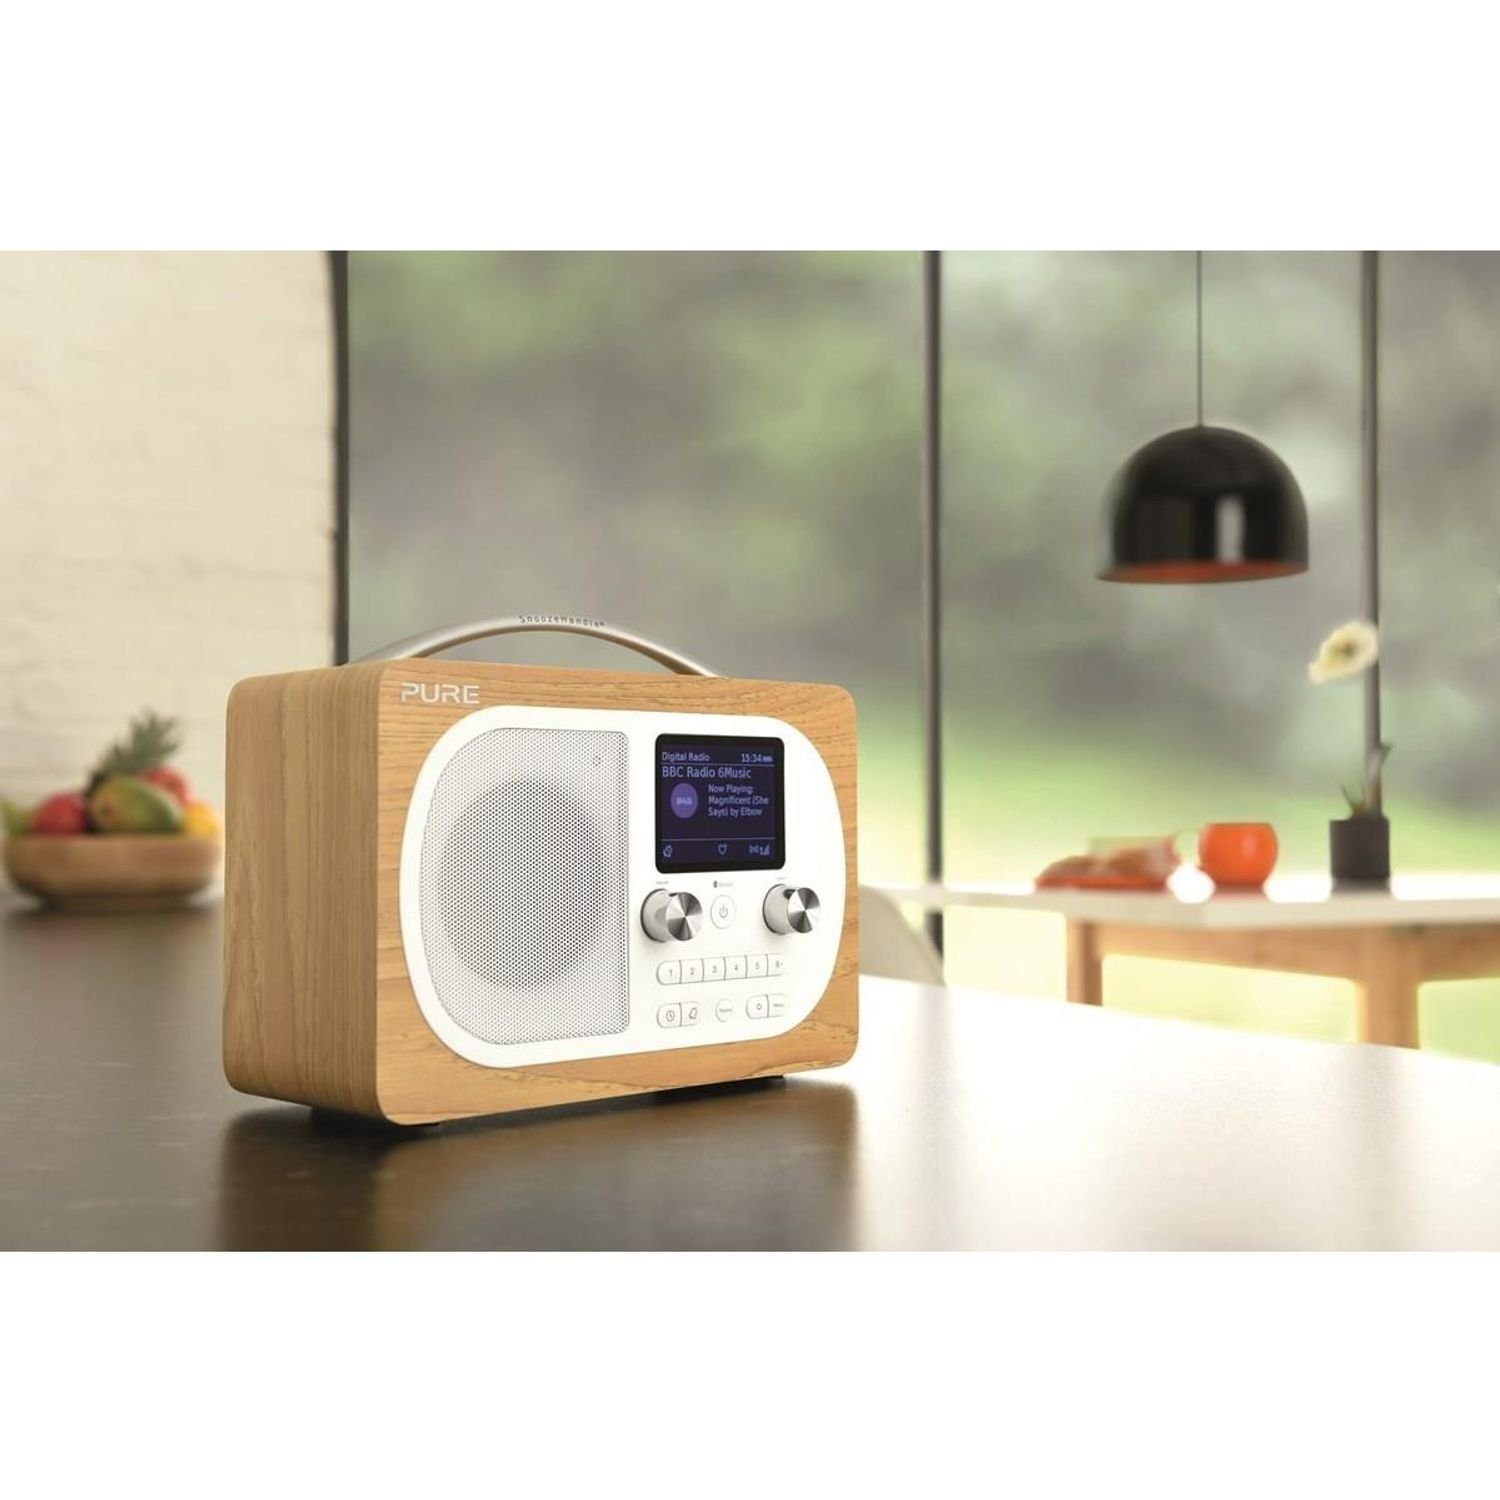 EU/UK Digital- Evoke UKW-Küchenradio Oak (DAB) DAB+ Digitalradio Pure H4 Bluetooth-Streaming